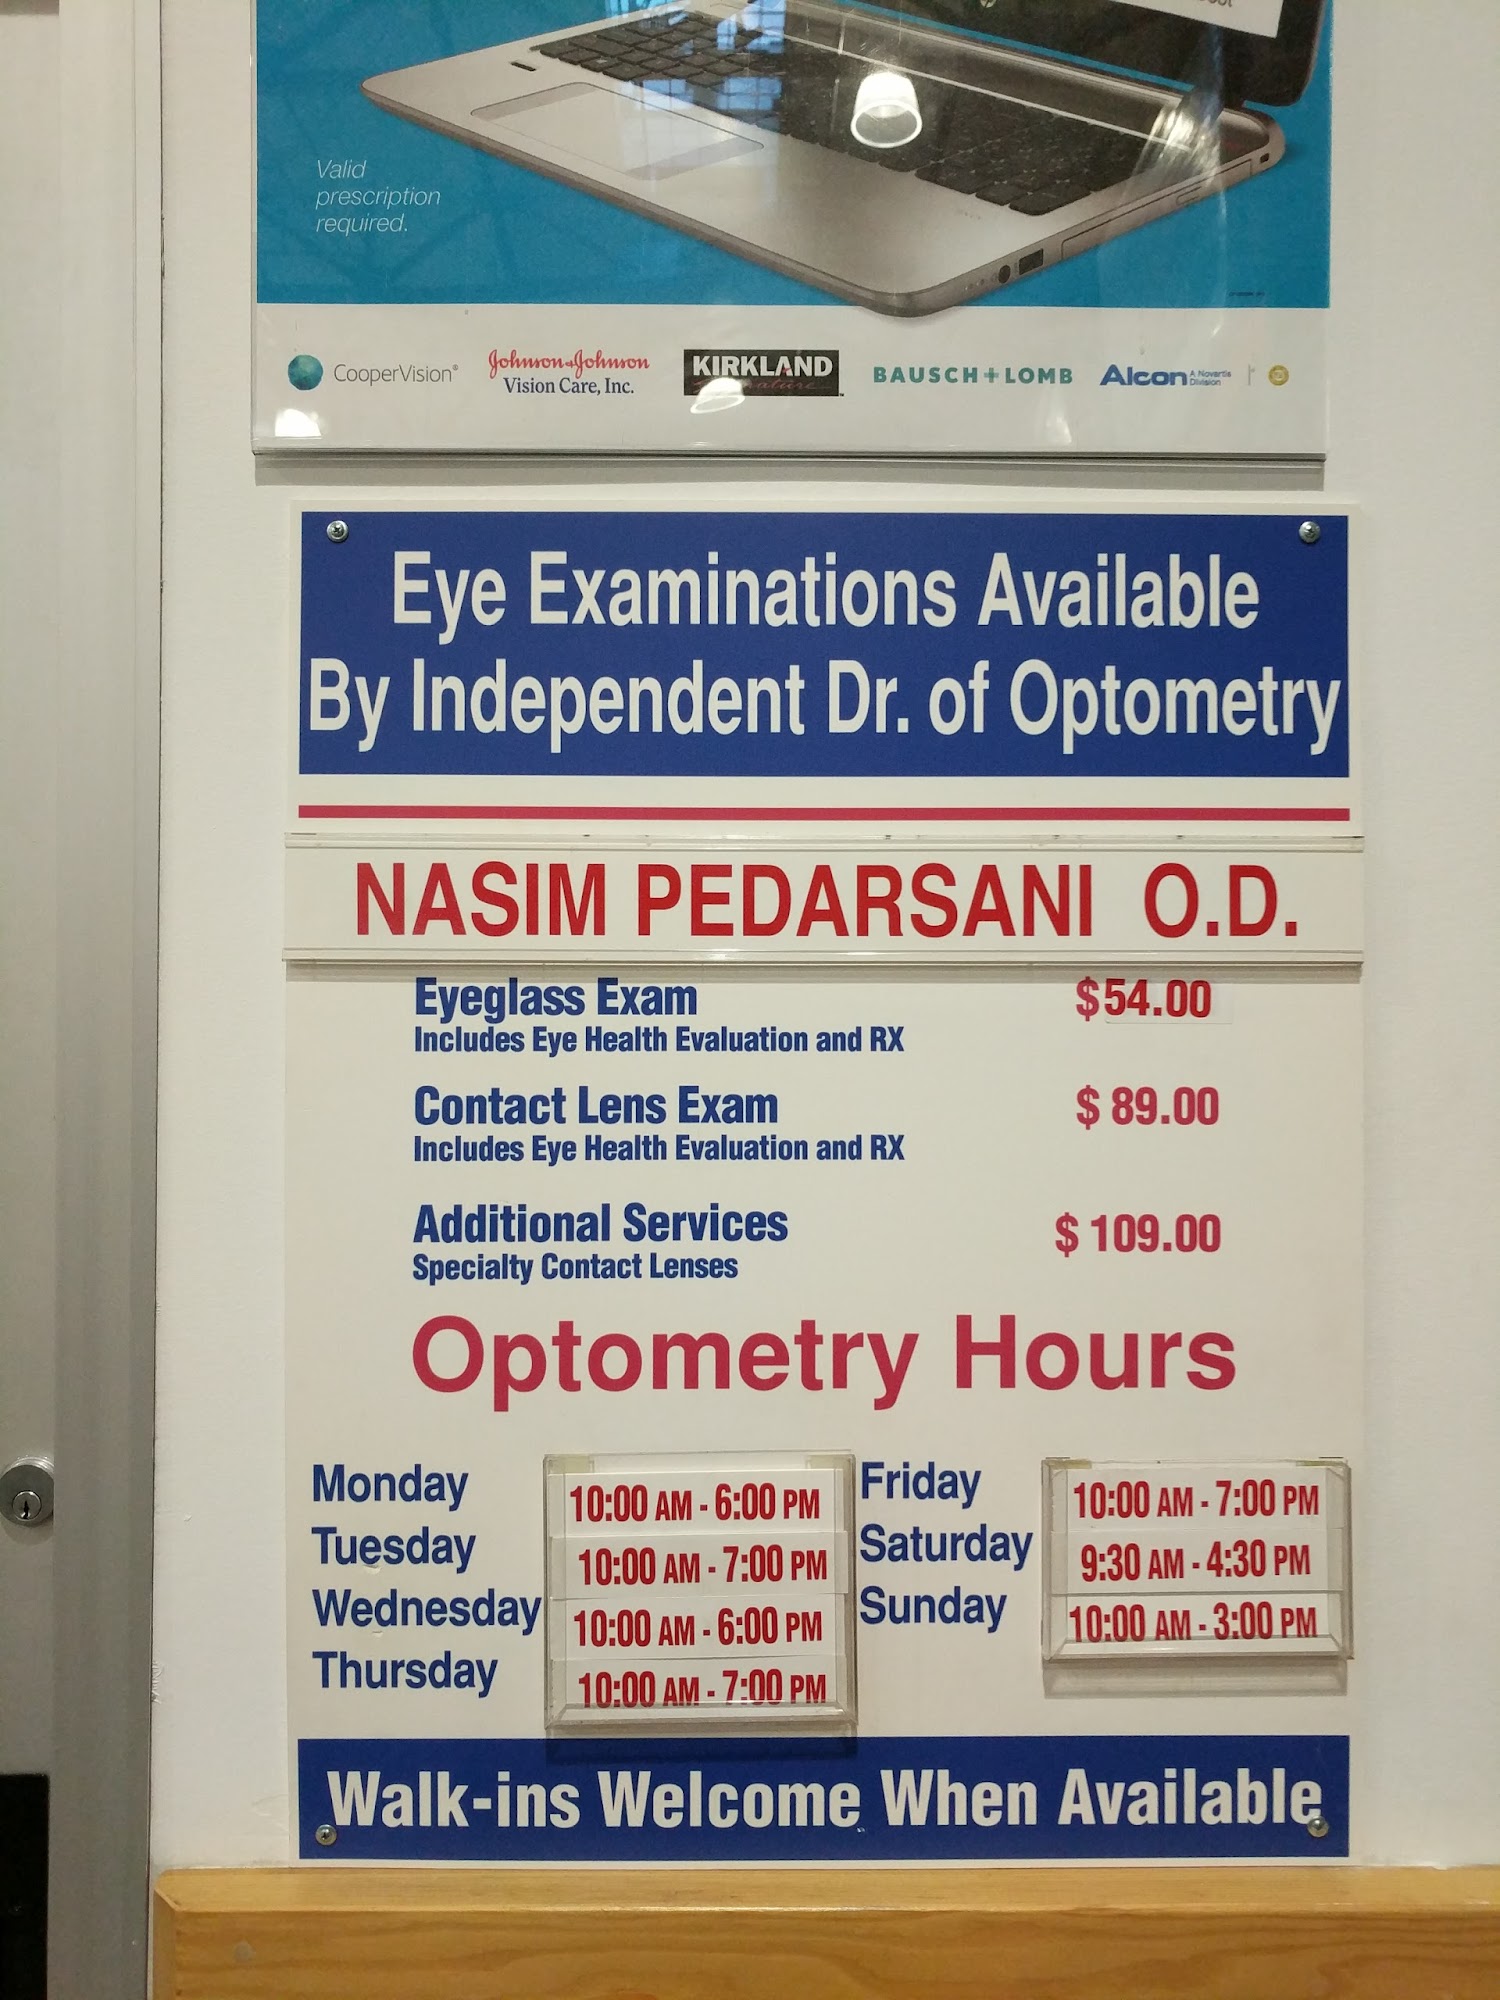 SpecialEyes Optometry - Dr. Nasim Pedarsani 18649 Via Princessa, Canyon Country California 91387